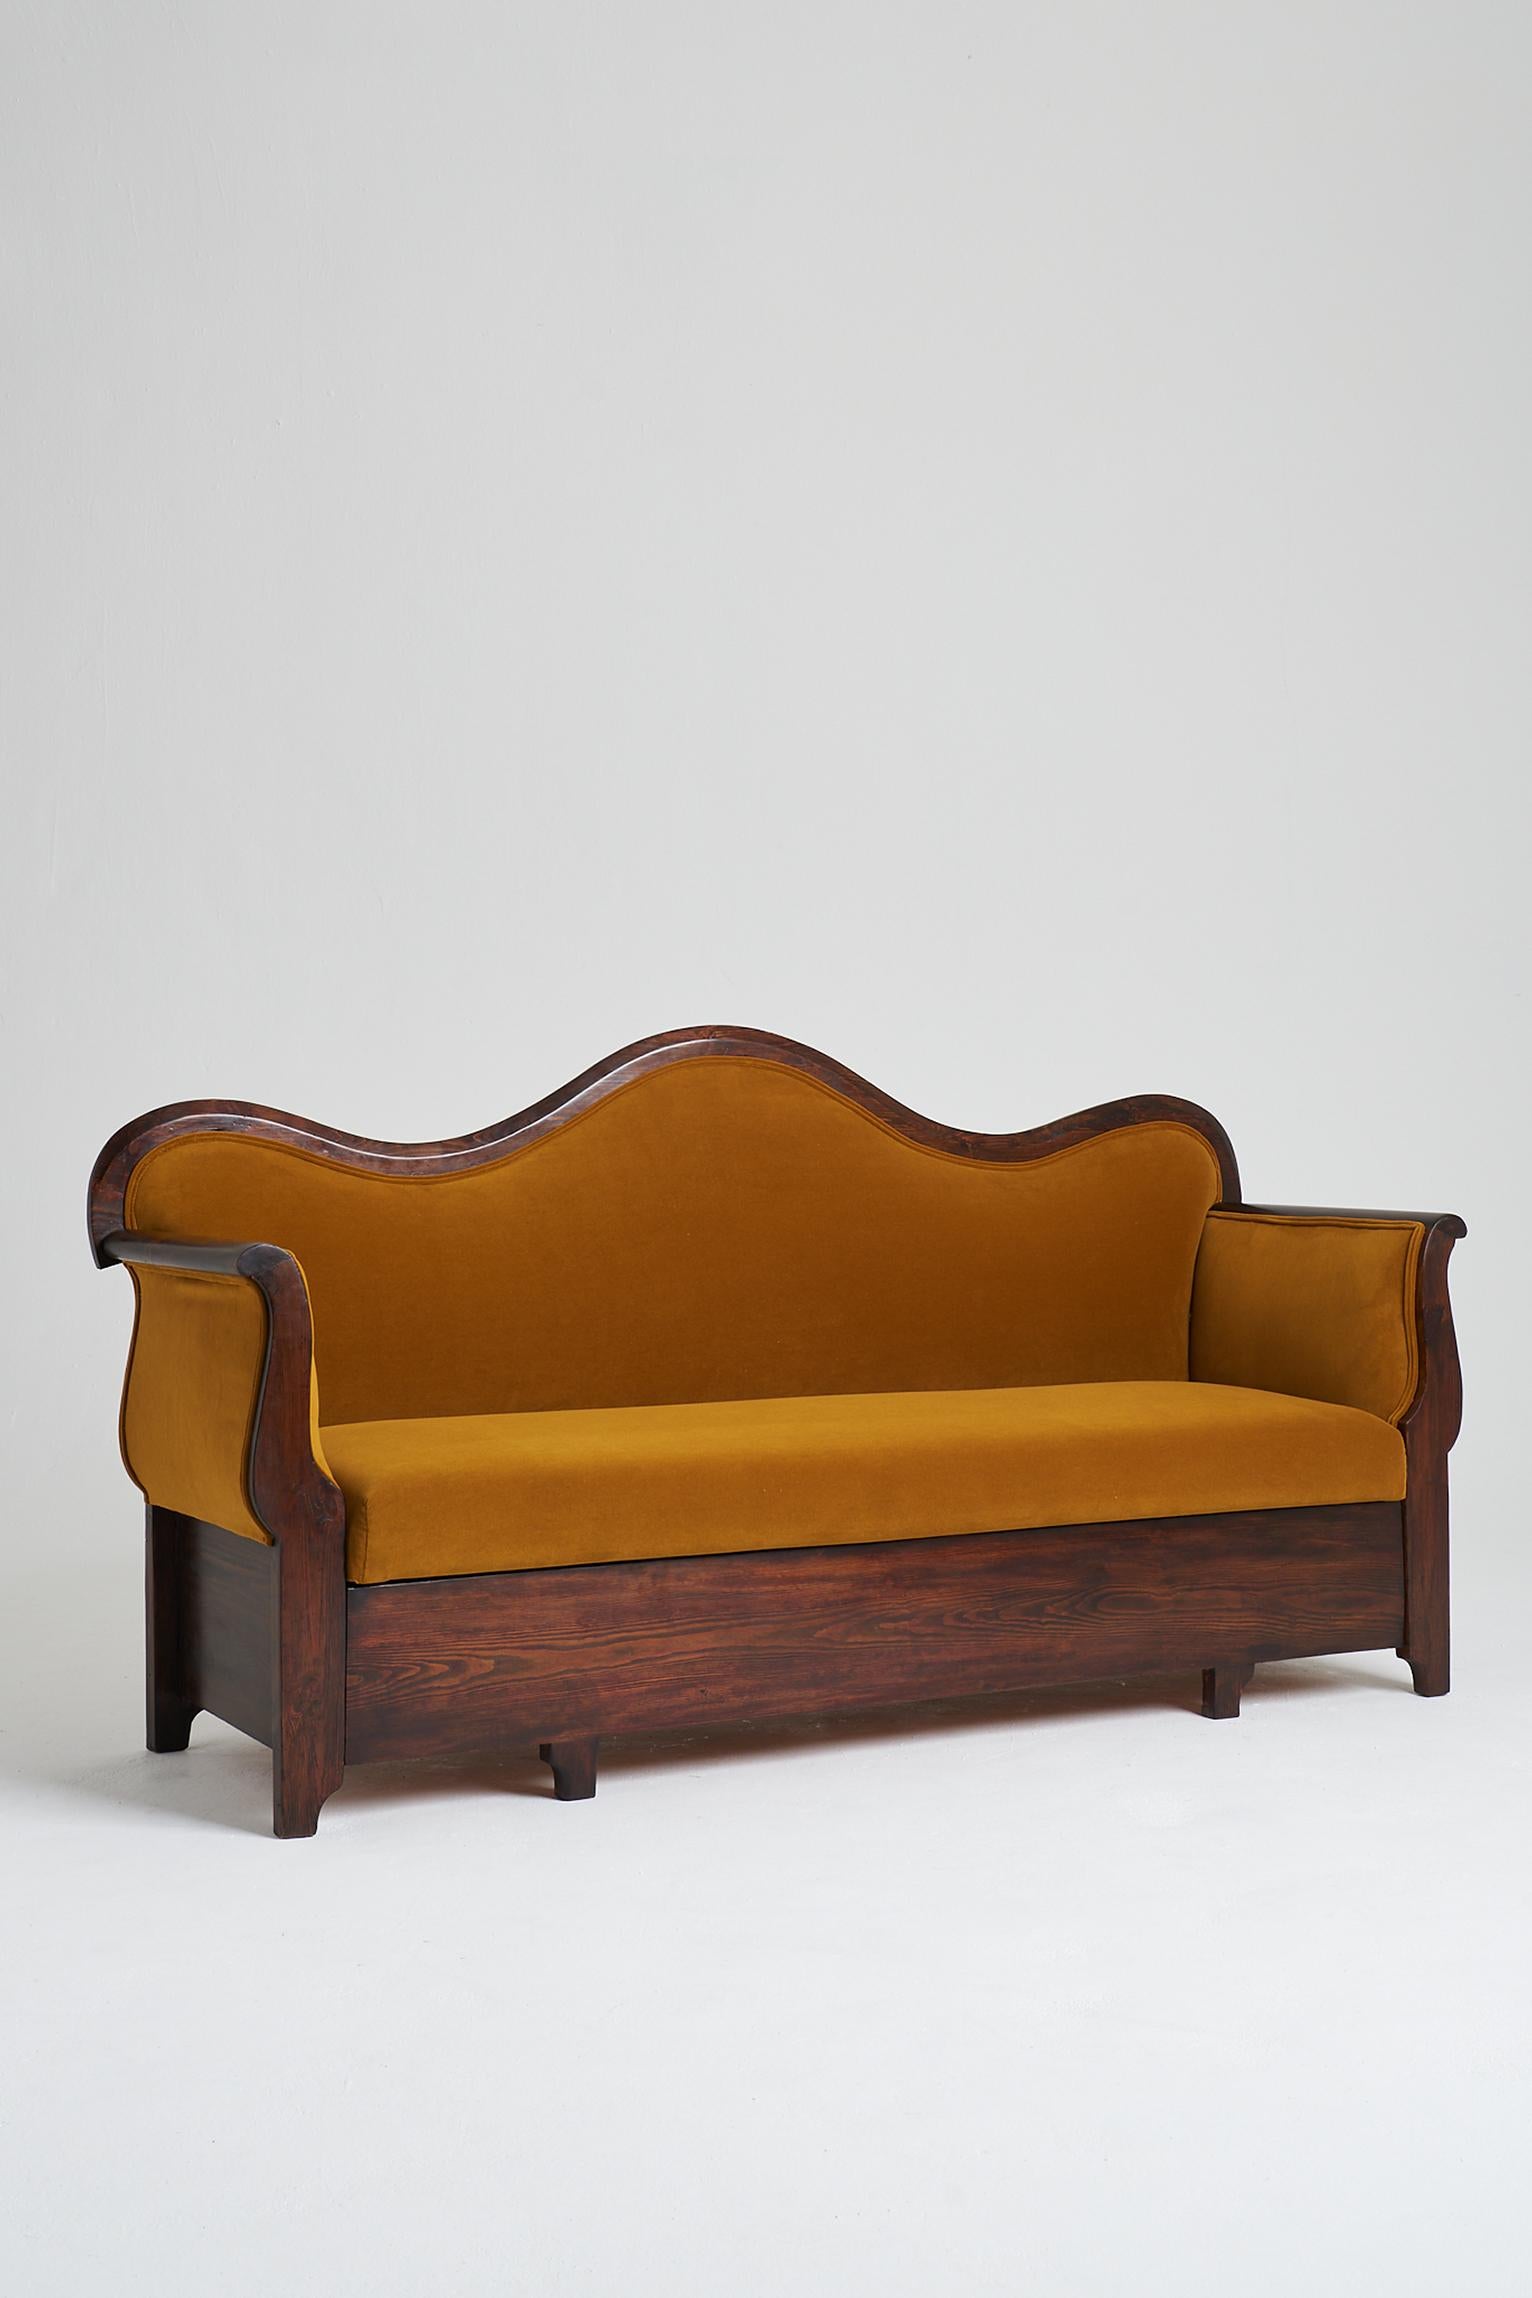 Neoclassical 19th Century Swedish Sofa